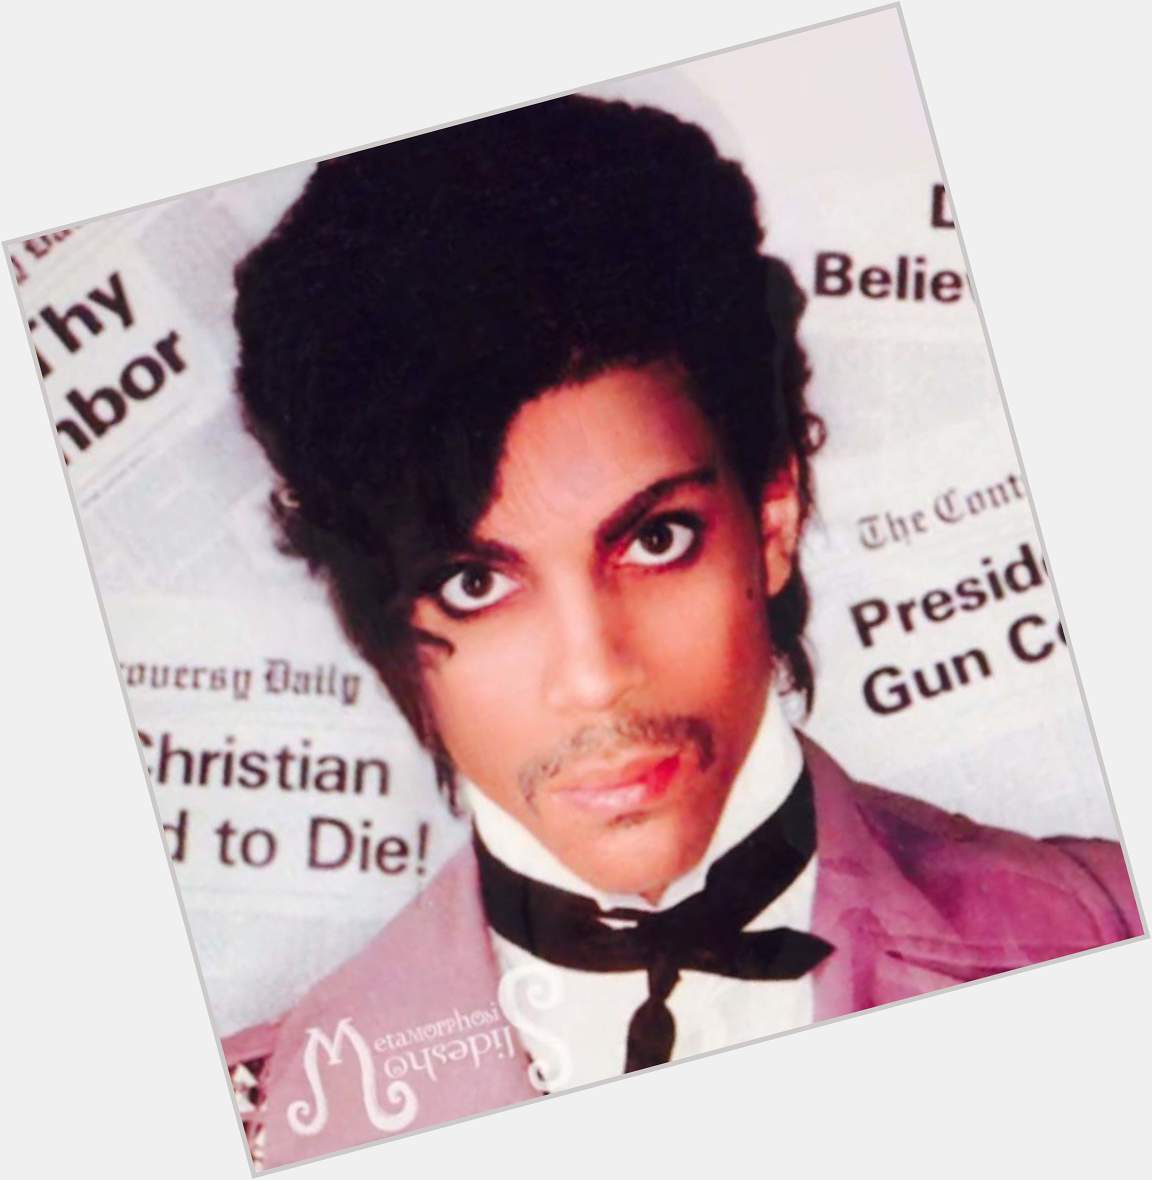 Happy 60th Heavenly birthday, Prince! 